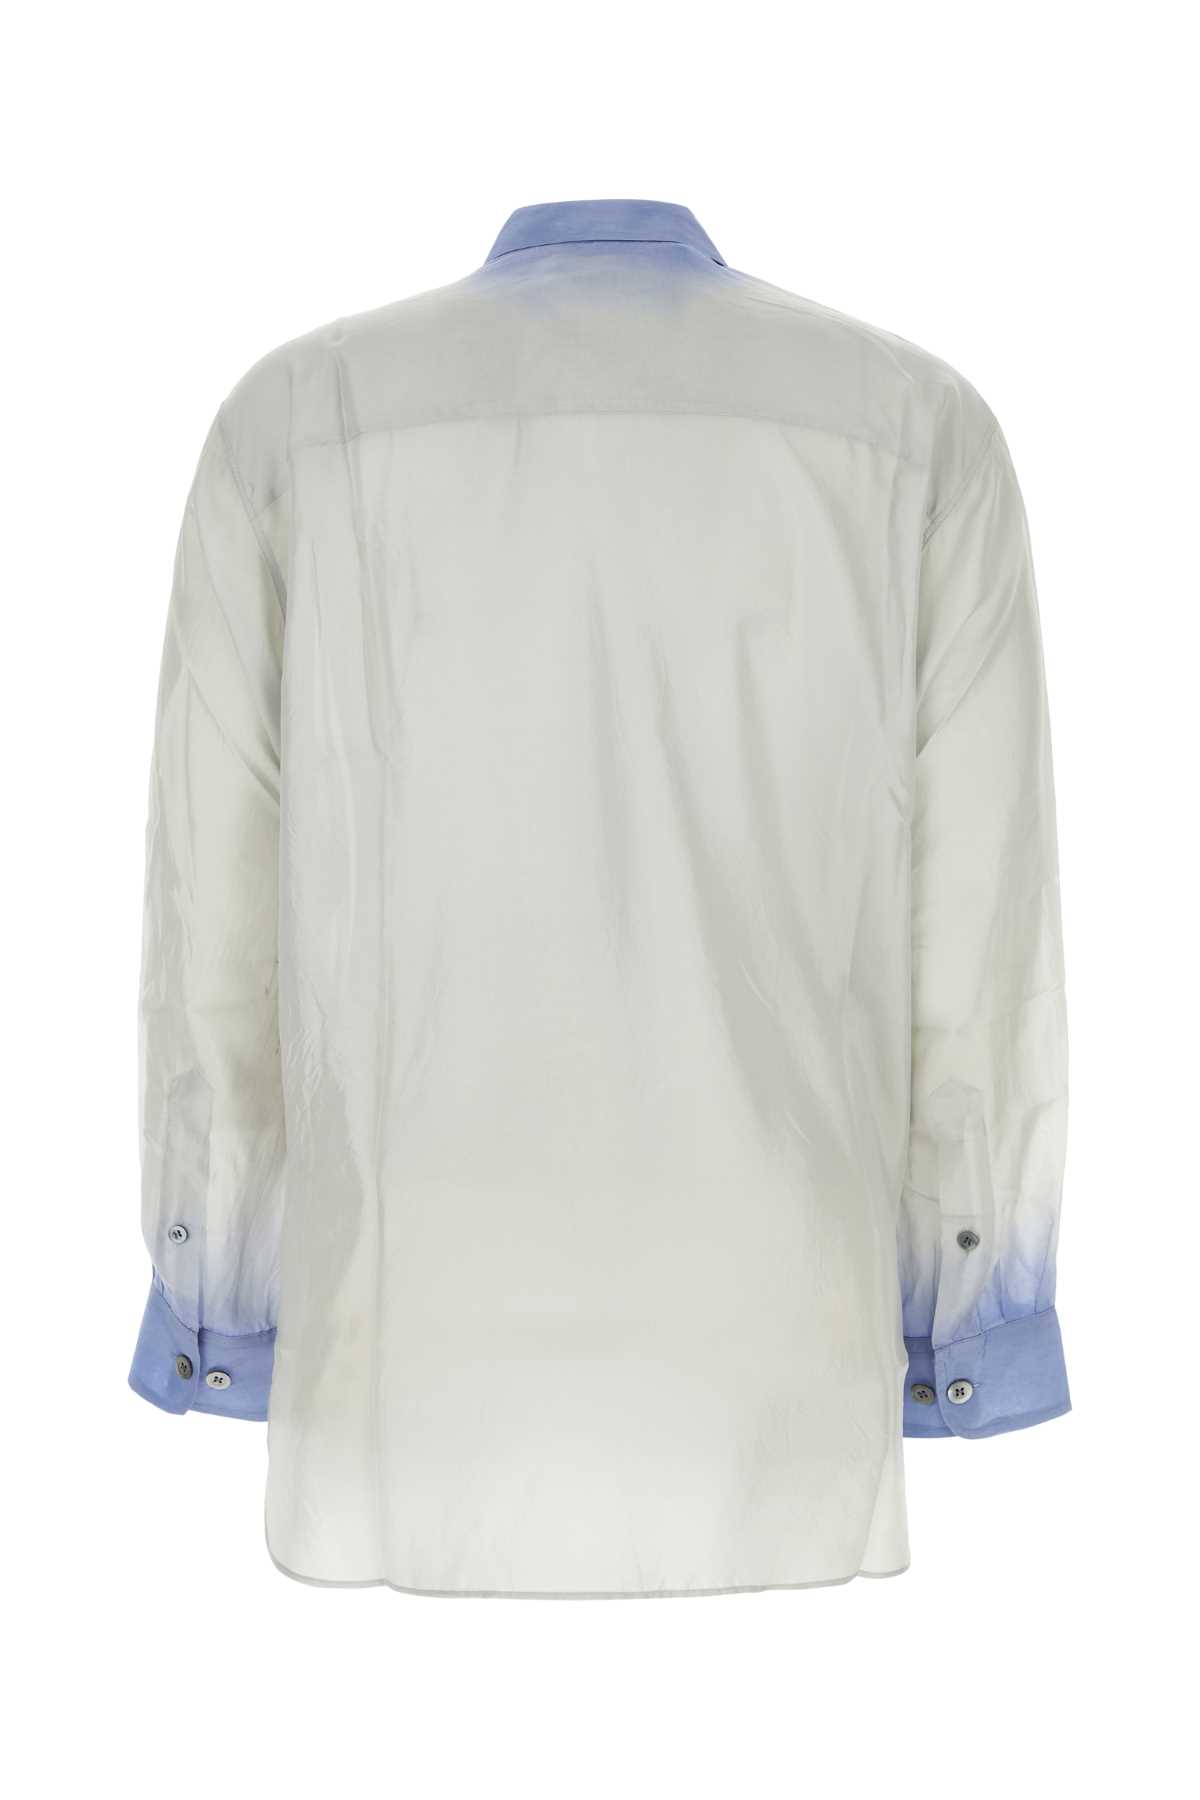 Dries Van Noten Two-tone Silk Calander Shirt In Blue